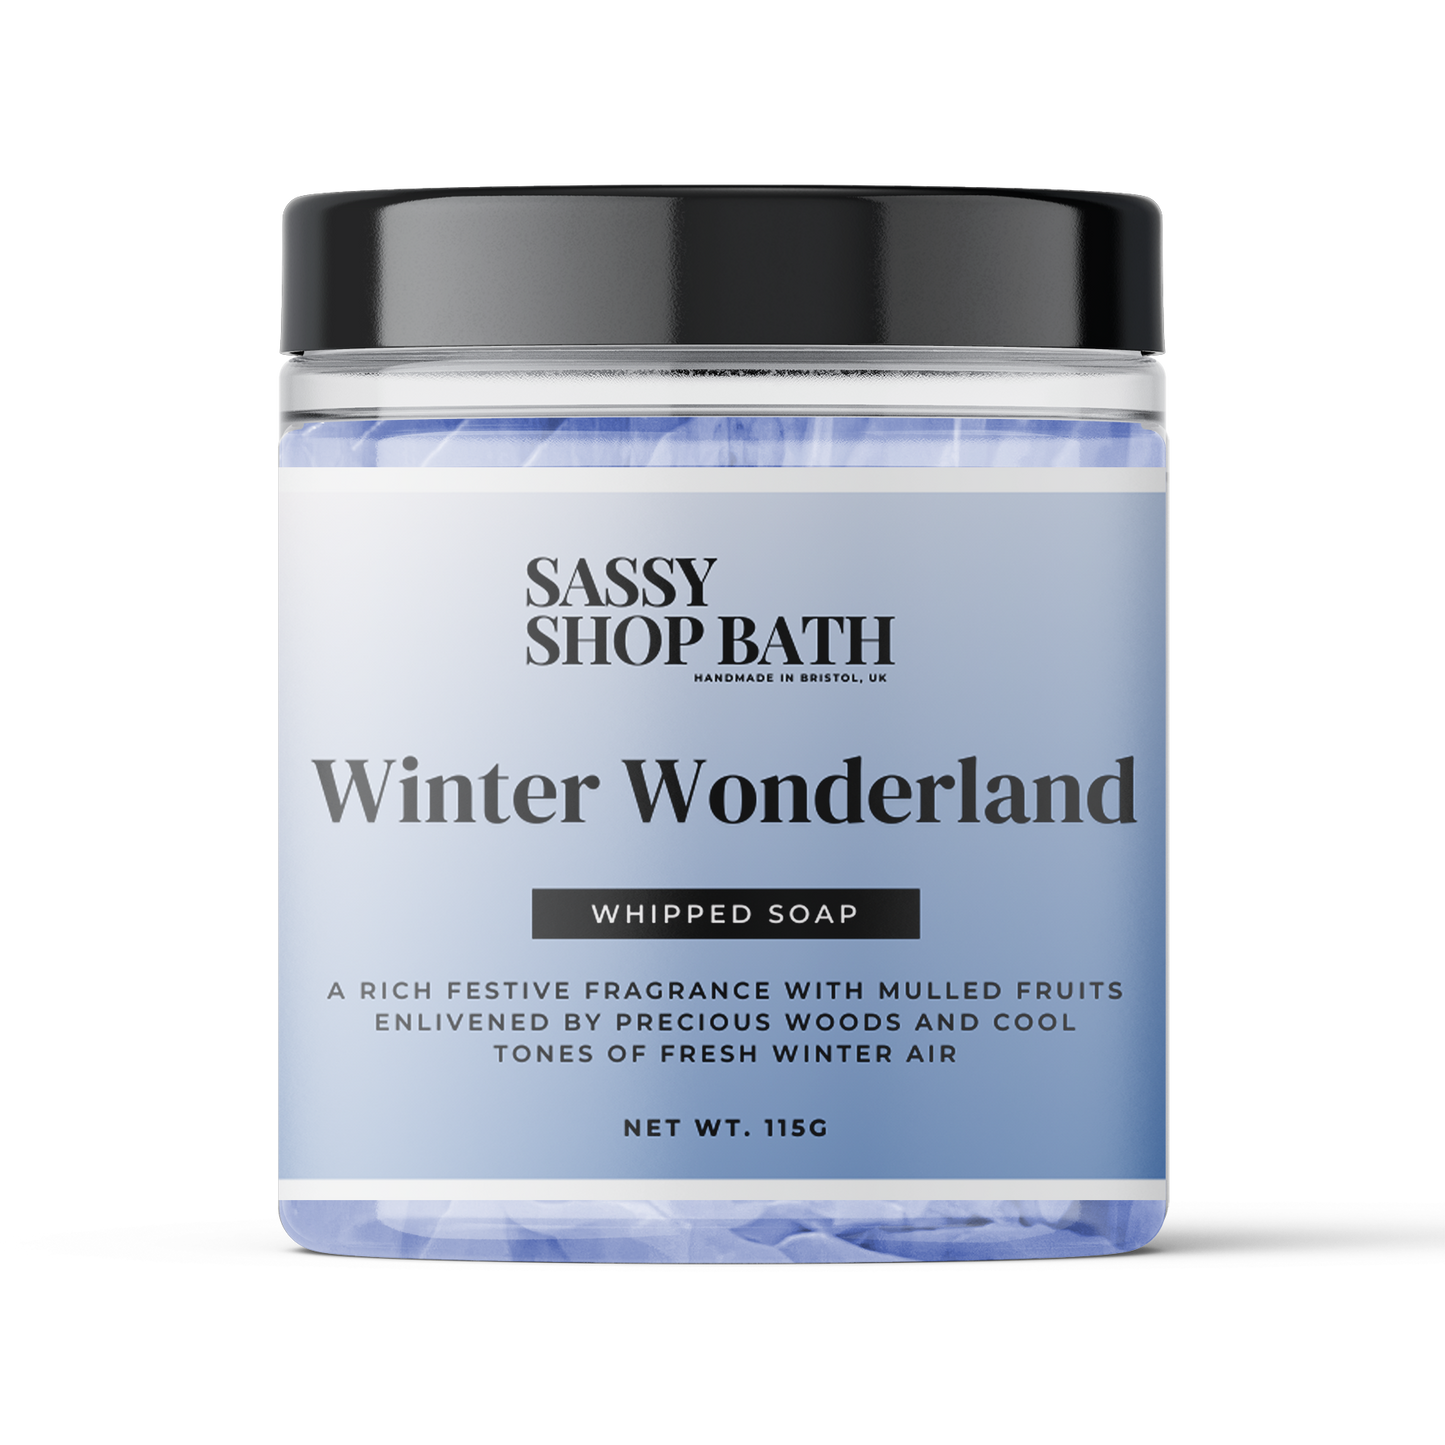 Sassy Shop Bath Whipped Soap - Winter Wonderland